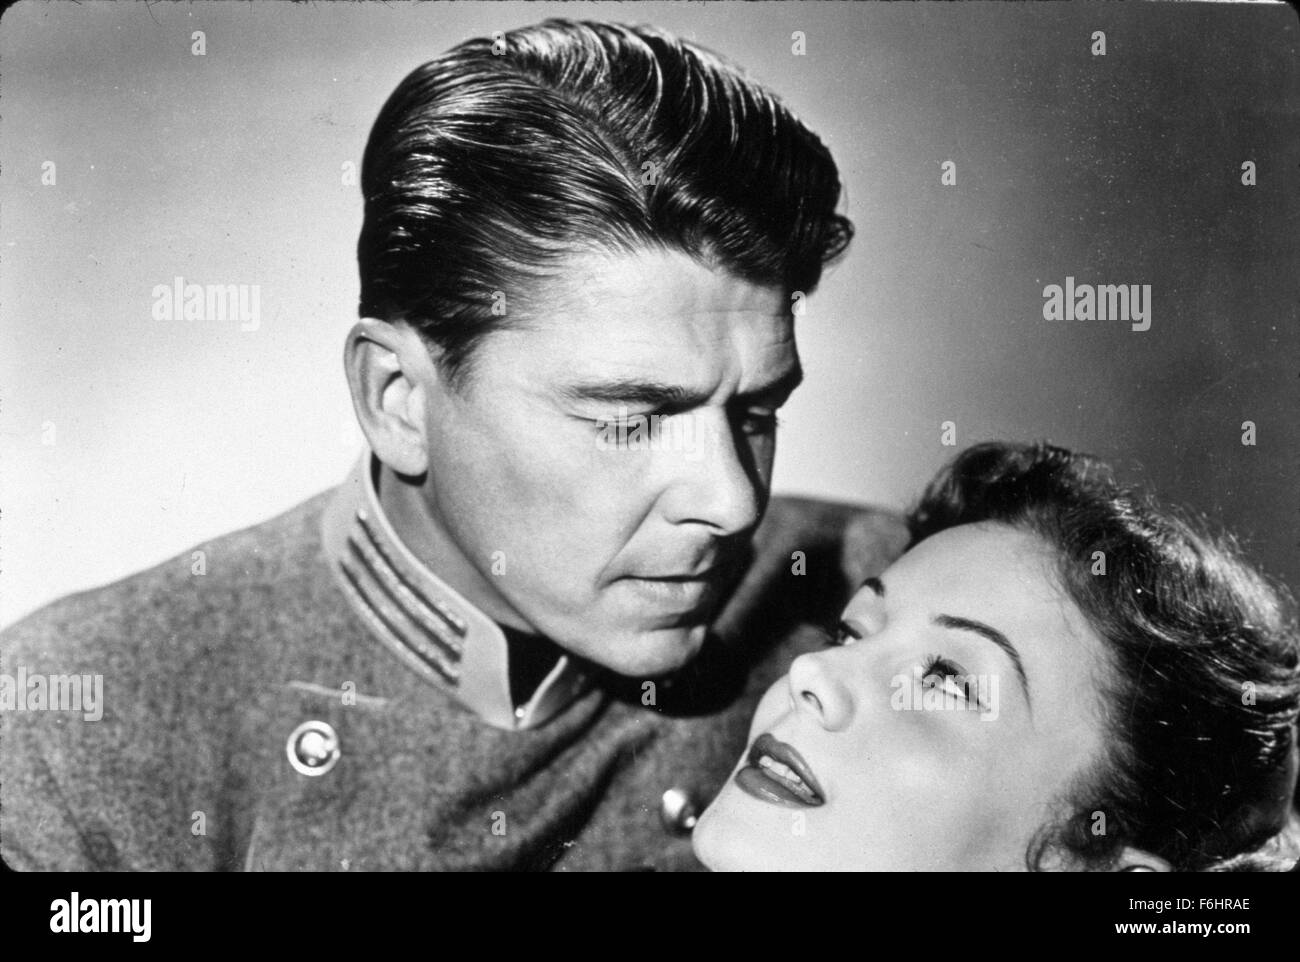 1951, Film Title: LAST OUTPOST, Director: LEWIS R FOSTER, Studio: PARAMOUNT, Pictured: RHONDA FLEMING, RONALD REAGAN, MILITARY UNIFORM, ROMANCE, LOVE (WARTIME ROMANCE), GAZE, GAZING. (Credit Image: SNAP) Stock Photo